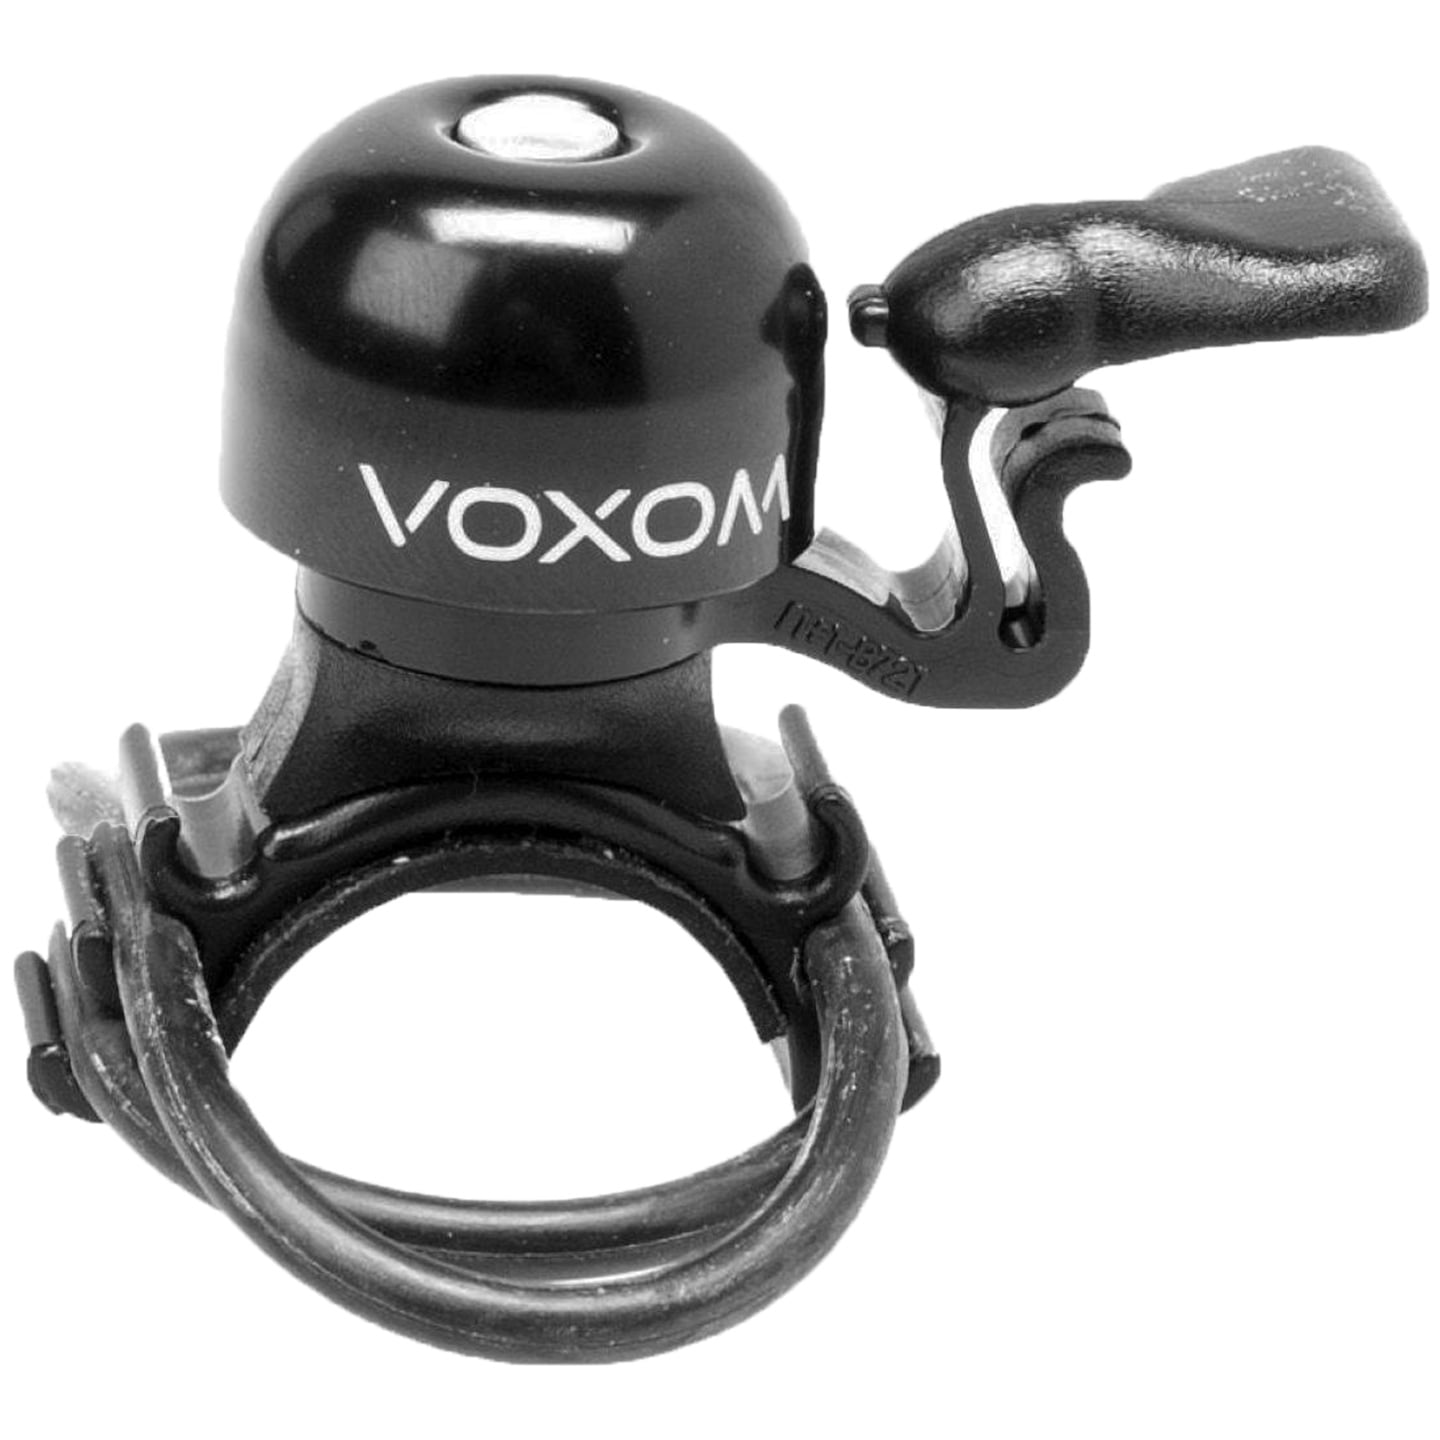 VOXOM KI7 Mini Bell, Bike accessories